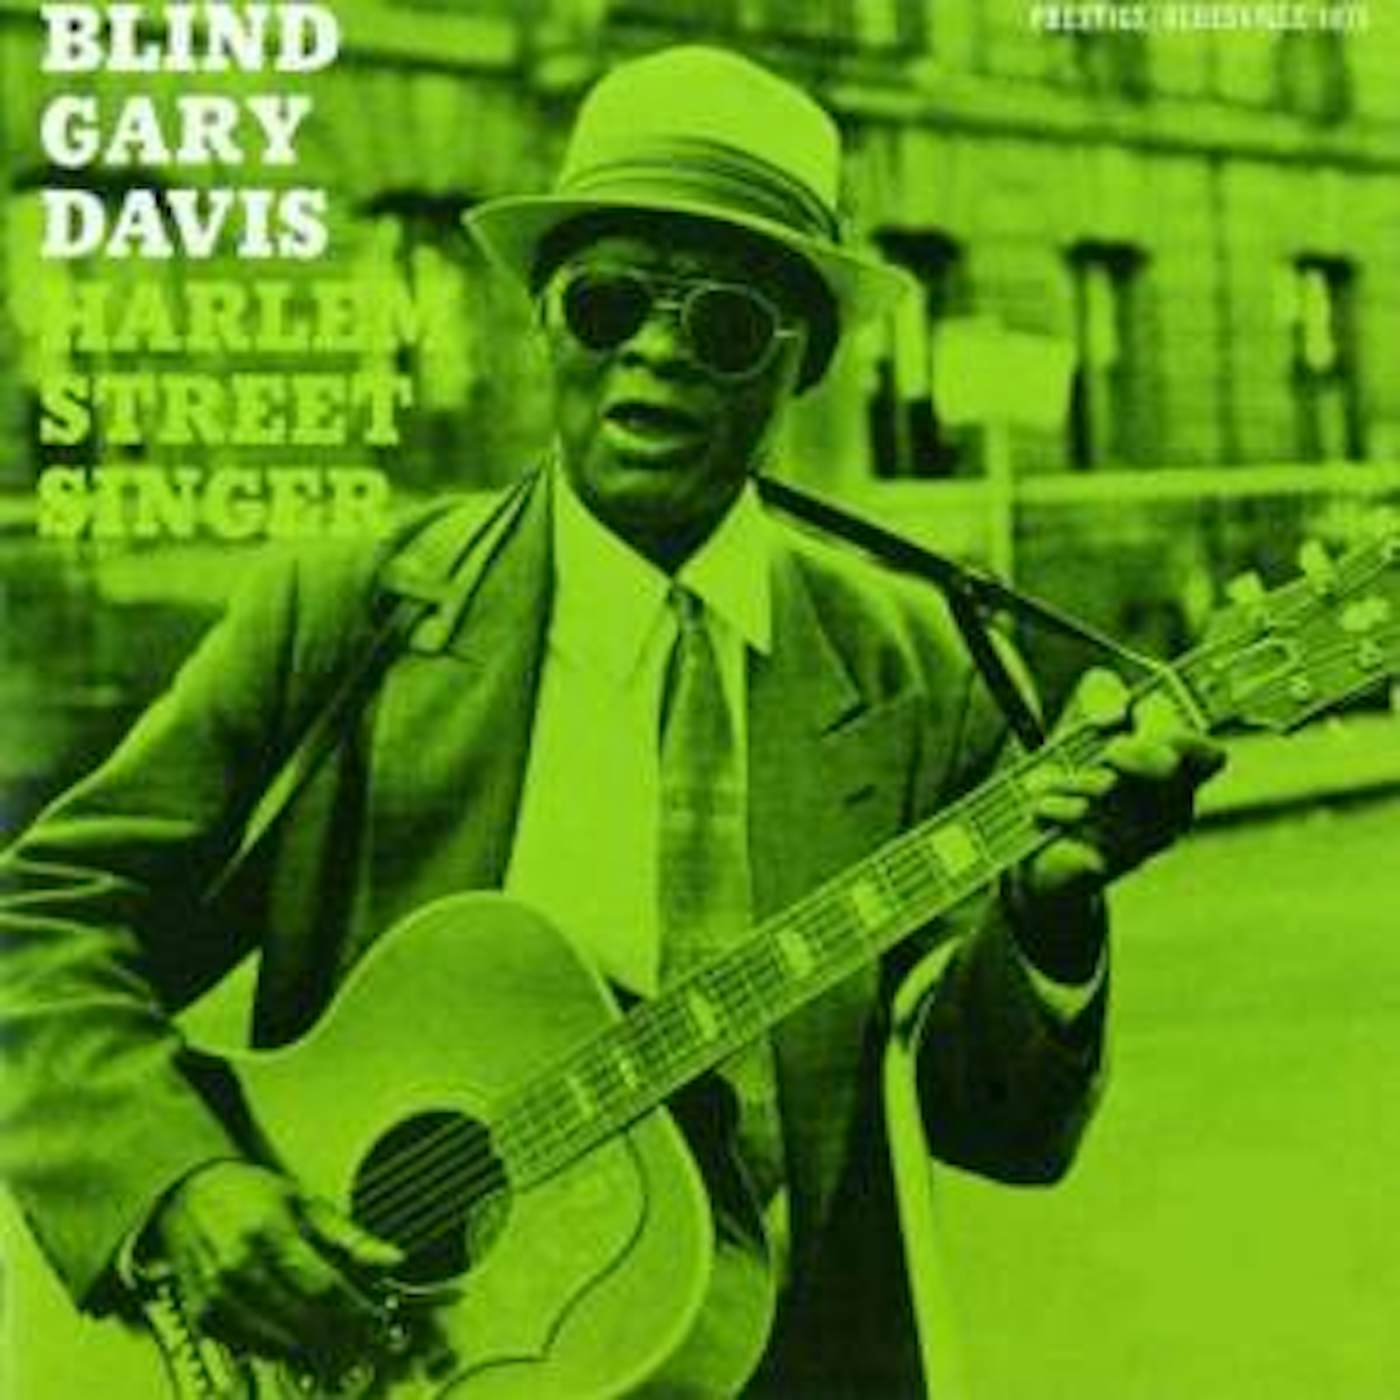 Gary Davis Harlem Street Singer Vinyl Record